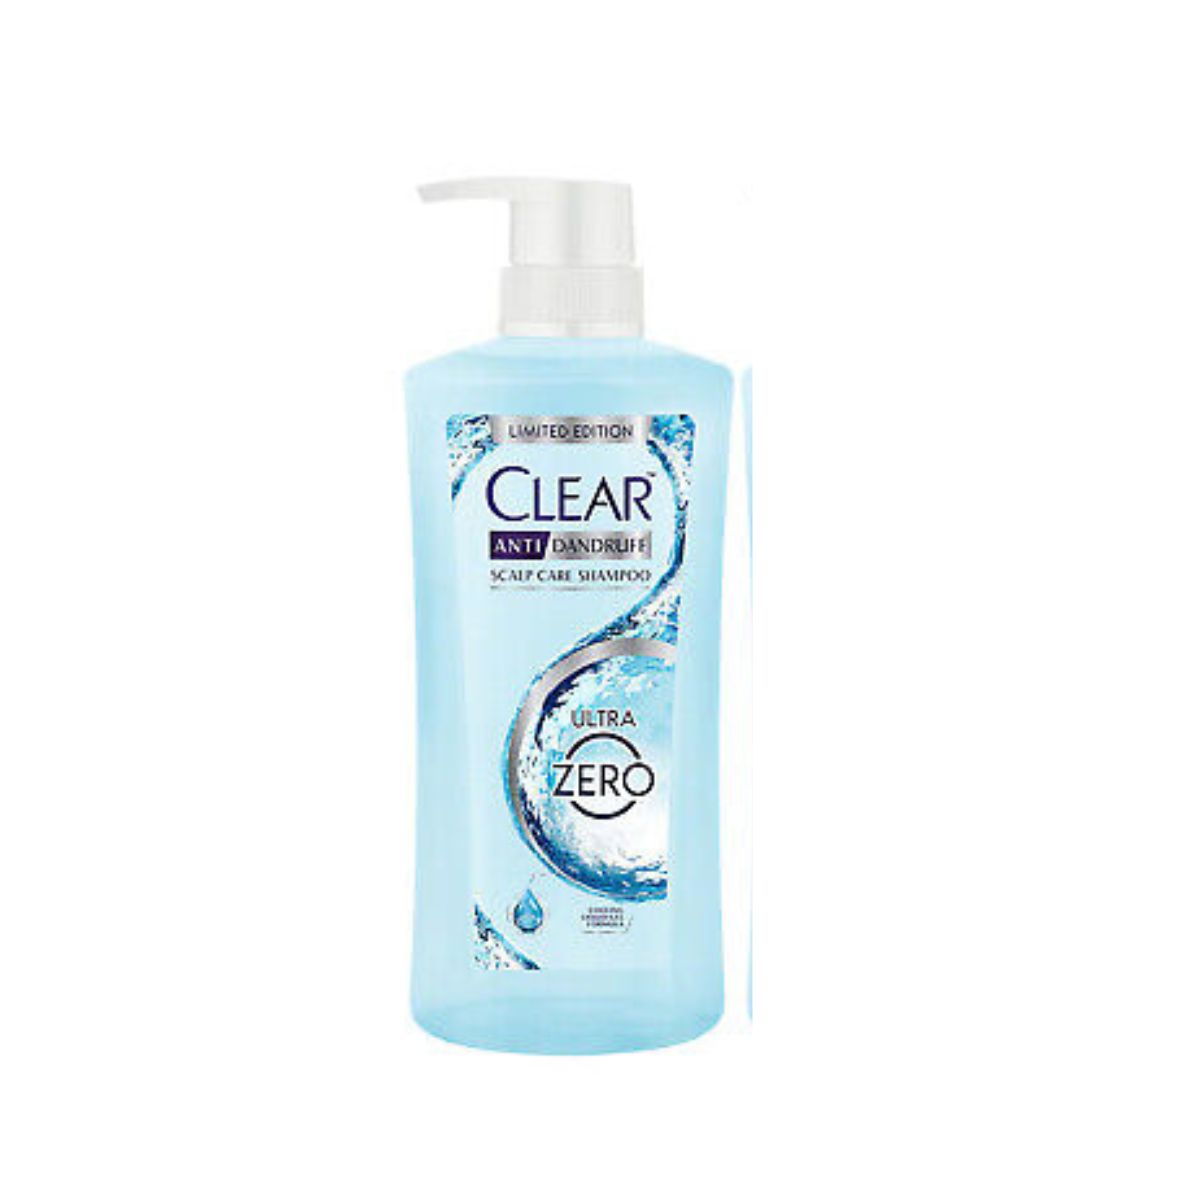 Clear Anti Dandruff Scalp Care Shampoo - Ultra Zero - 480ml